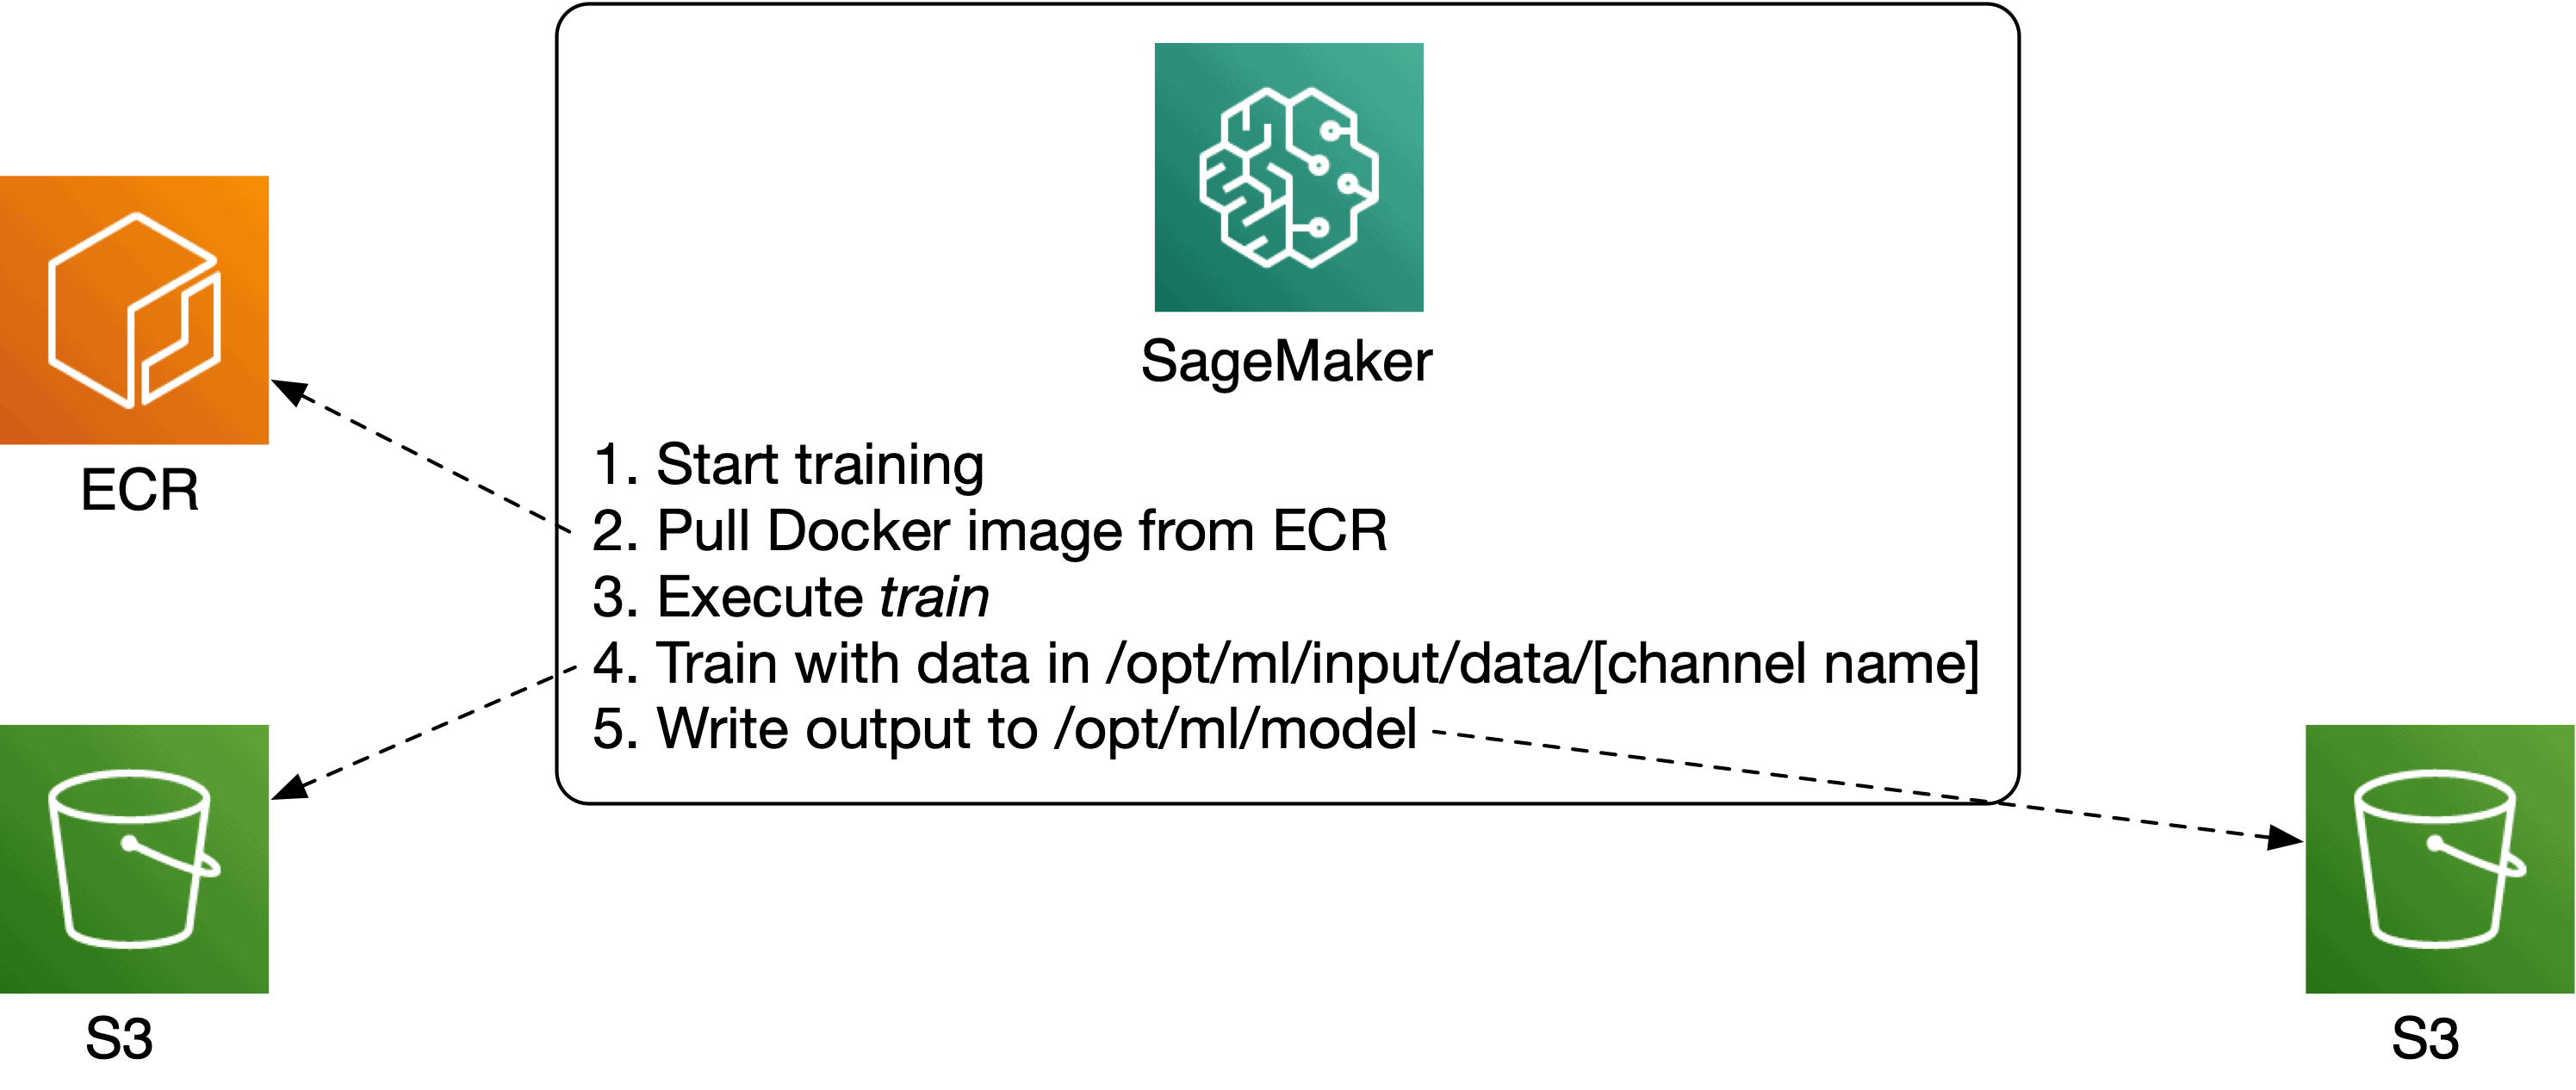 SageMaker training process